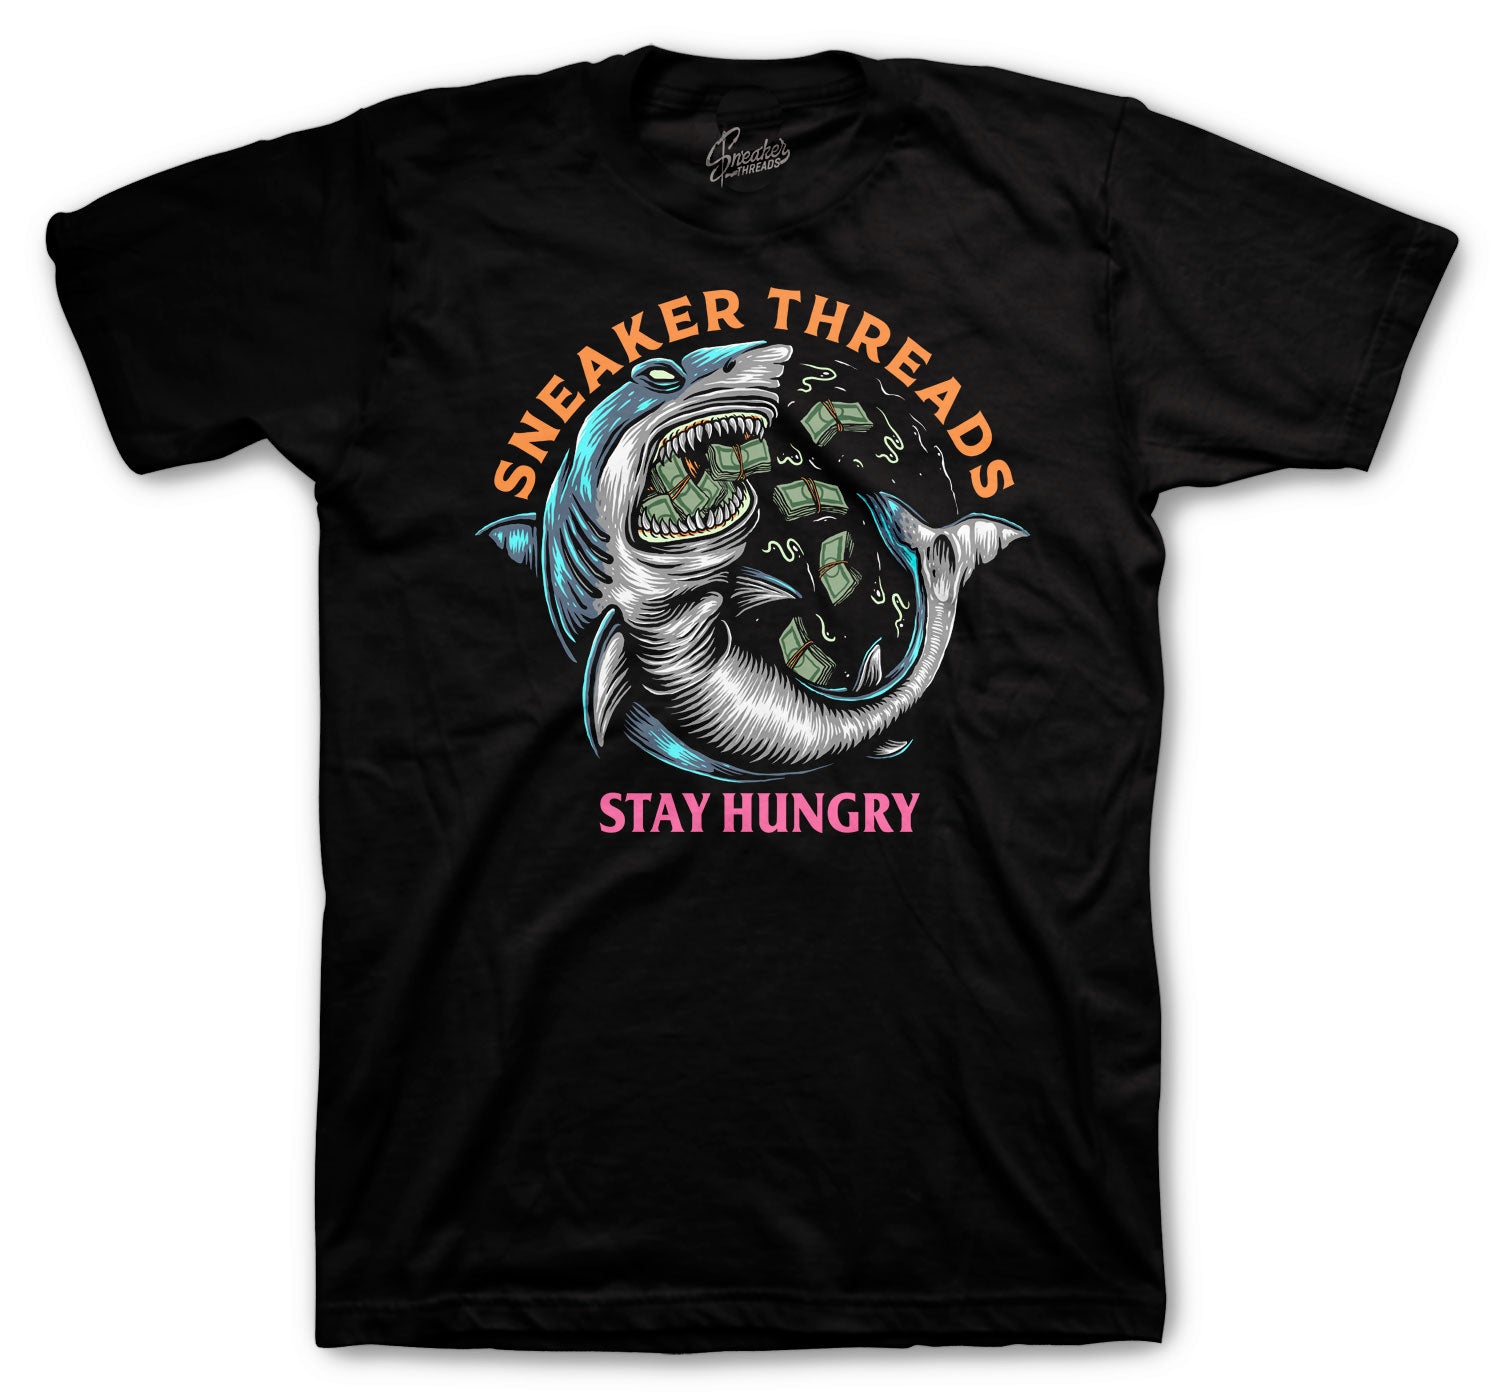 Retro 1 Bio Hack Shirt -  Stay Hungry - Black